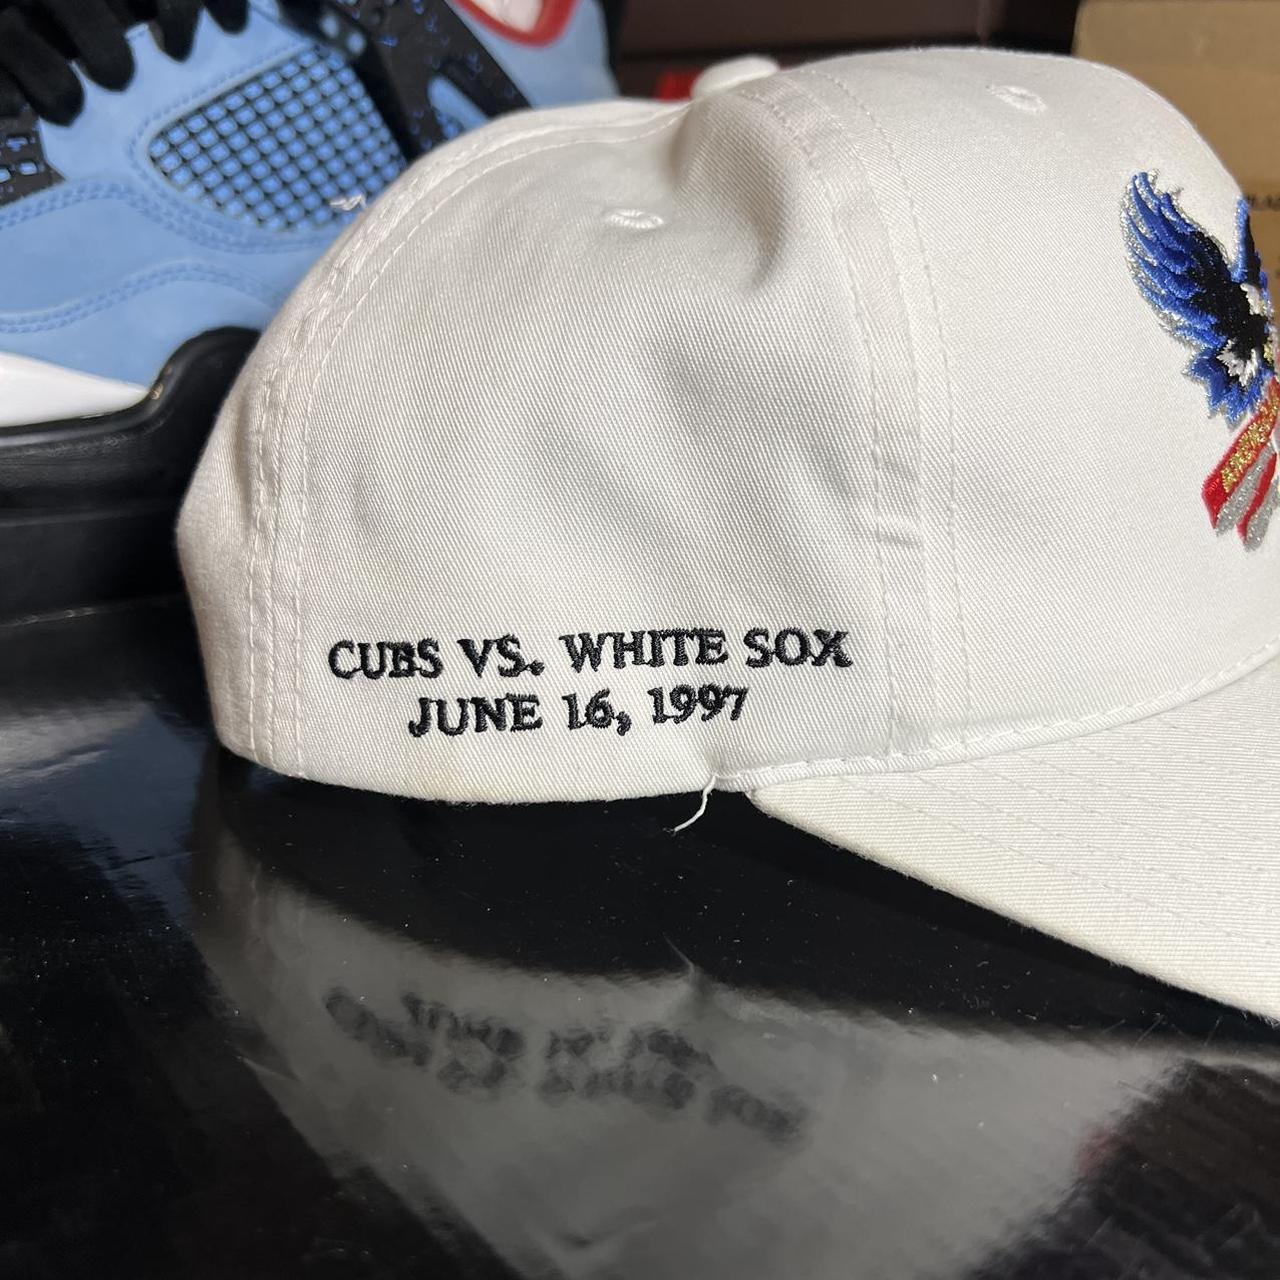 Chicago White Sox Tee-Shirt #whitesox #chicago #mlb - Depop